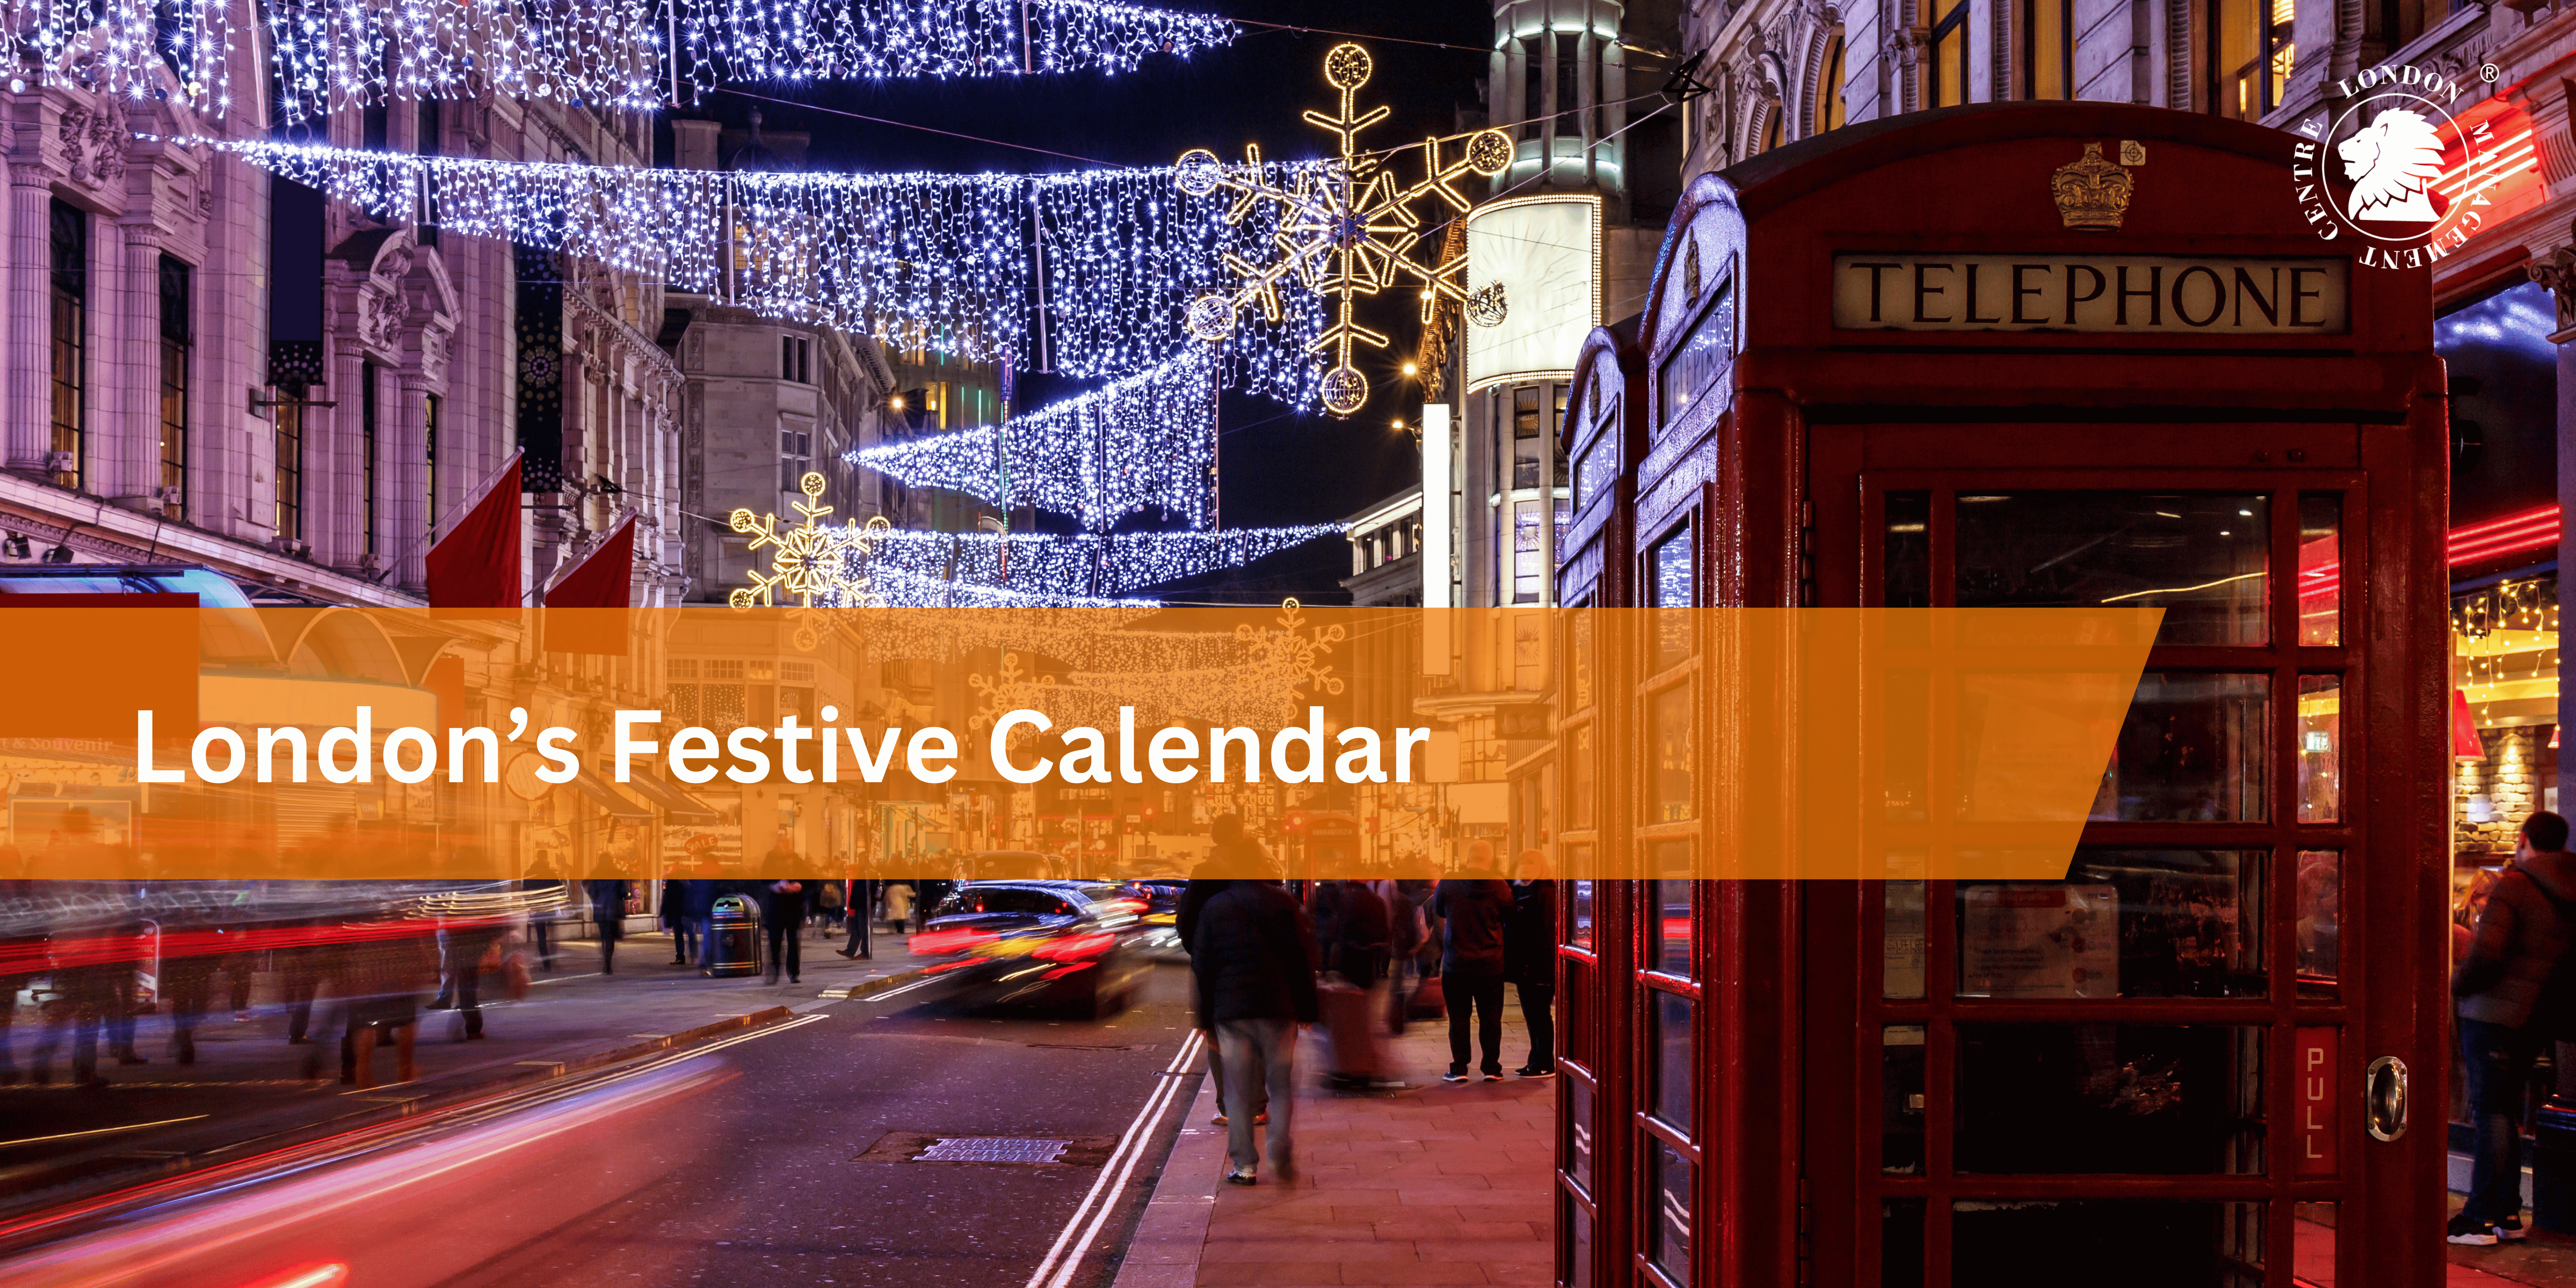 London's Festive Calendar